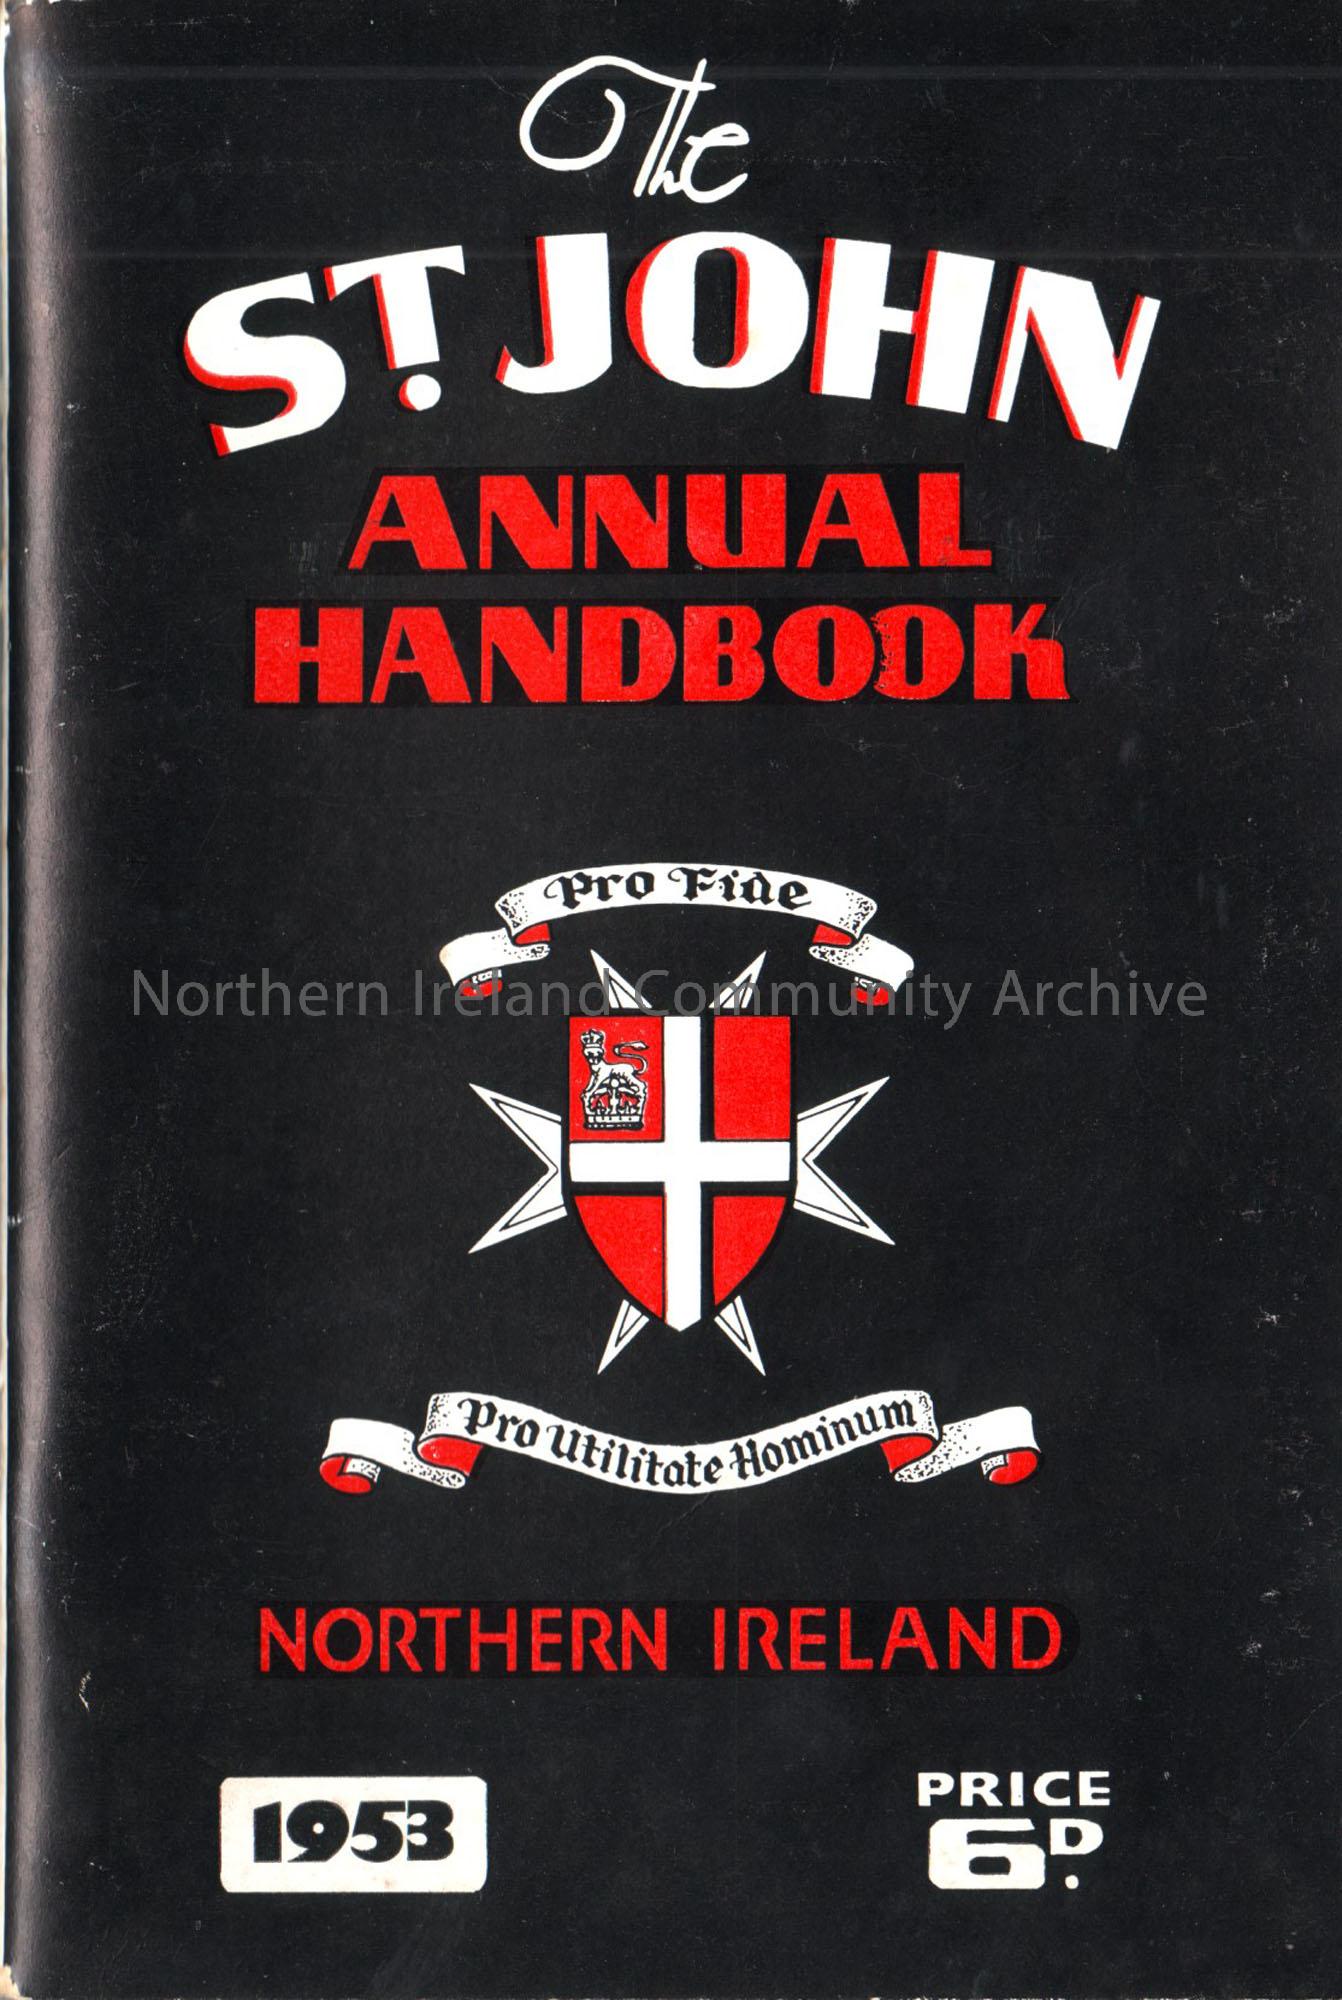 The St. John Annual Handbook, Northern Ireland, 1953.